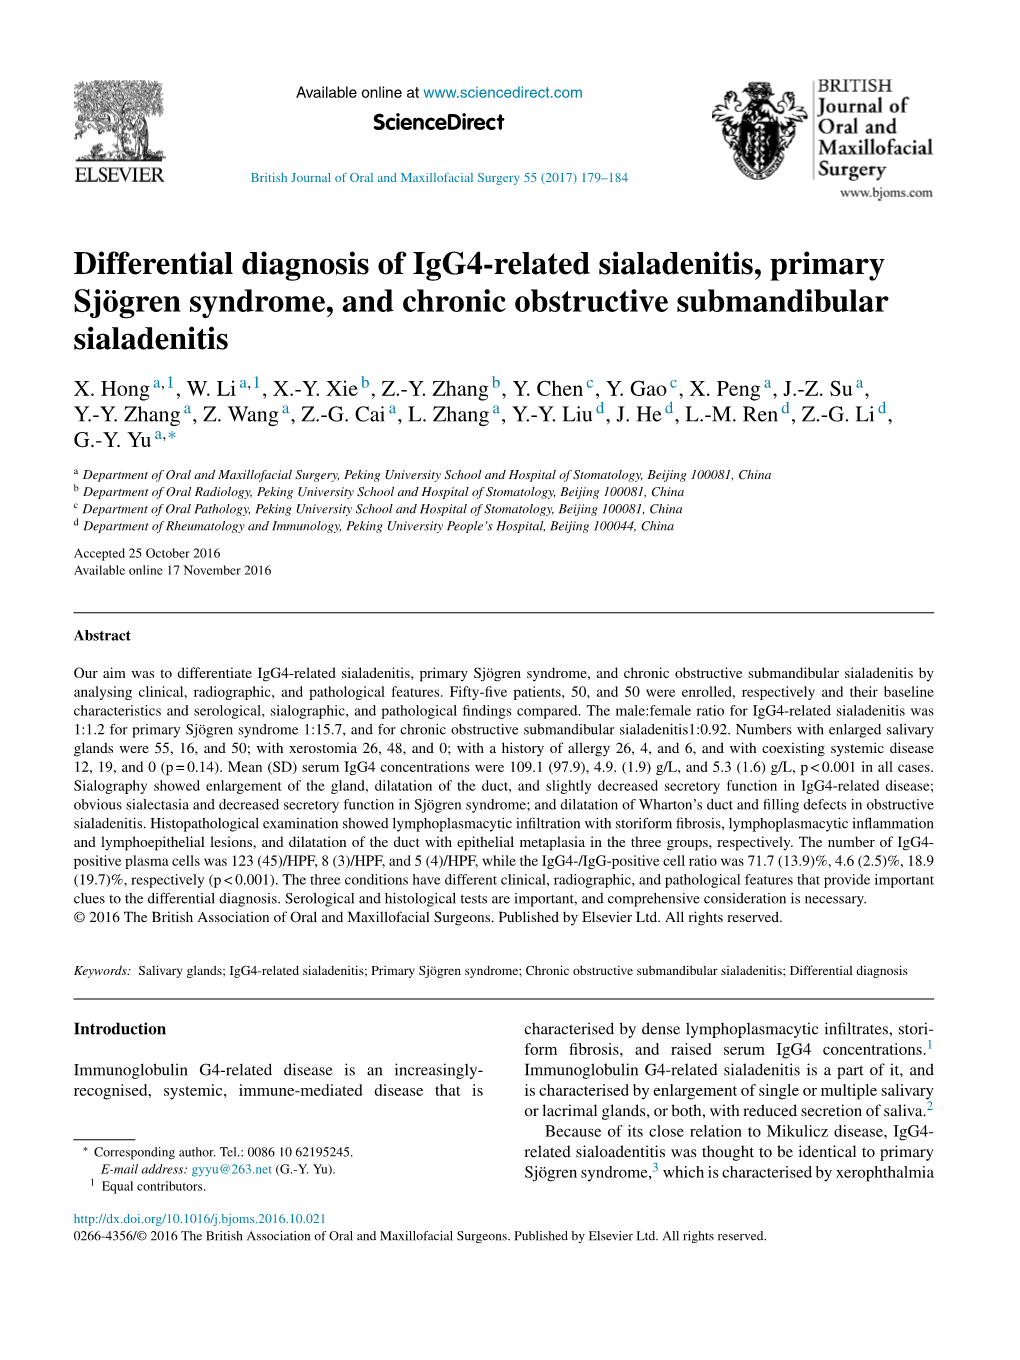 Differential Diagnosis of Igg4-Related Sialadenitis, Primary Sjögren